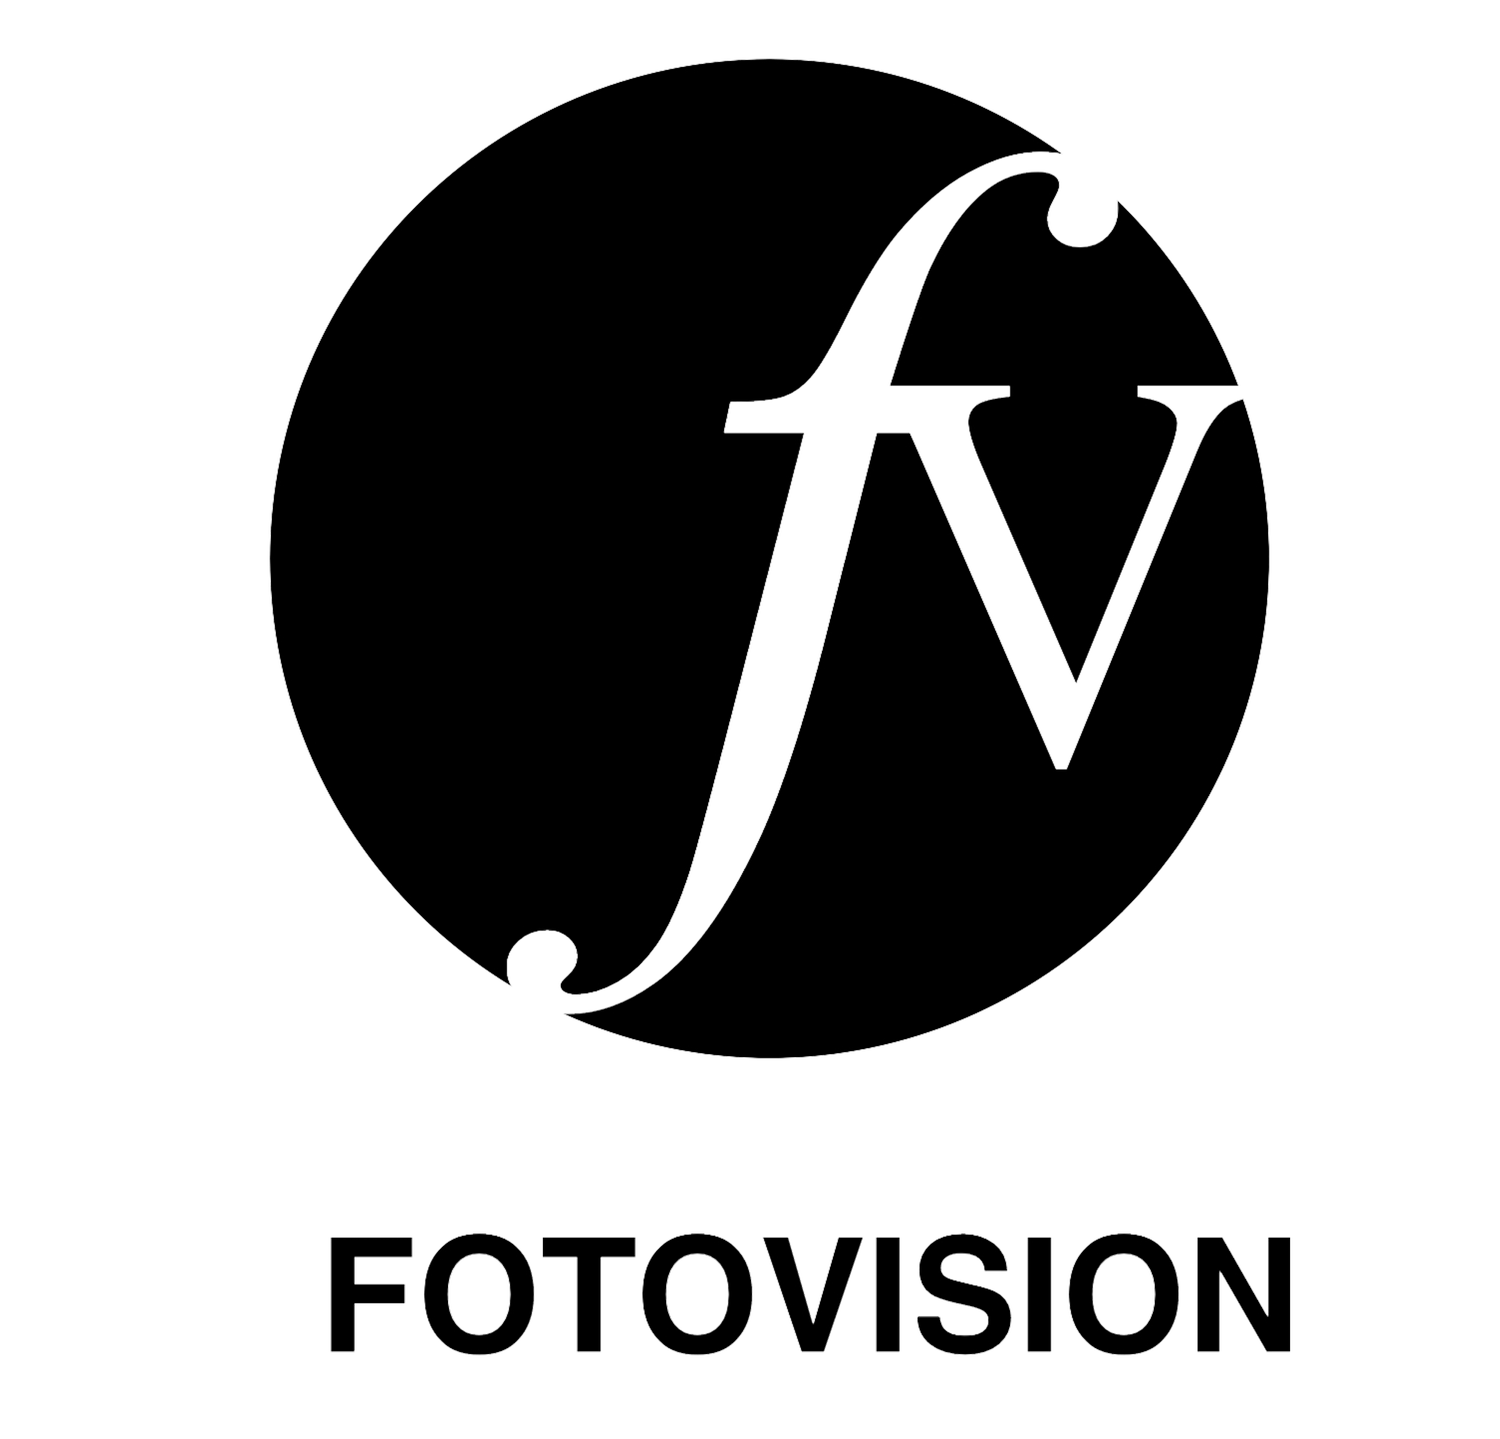 Fotovision logo